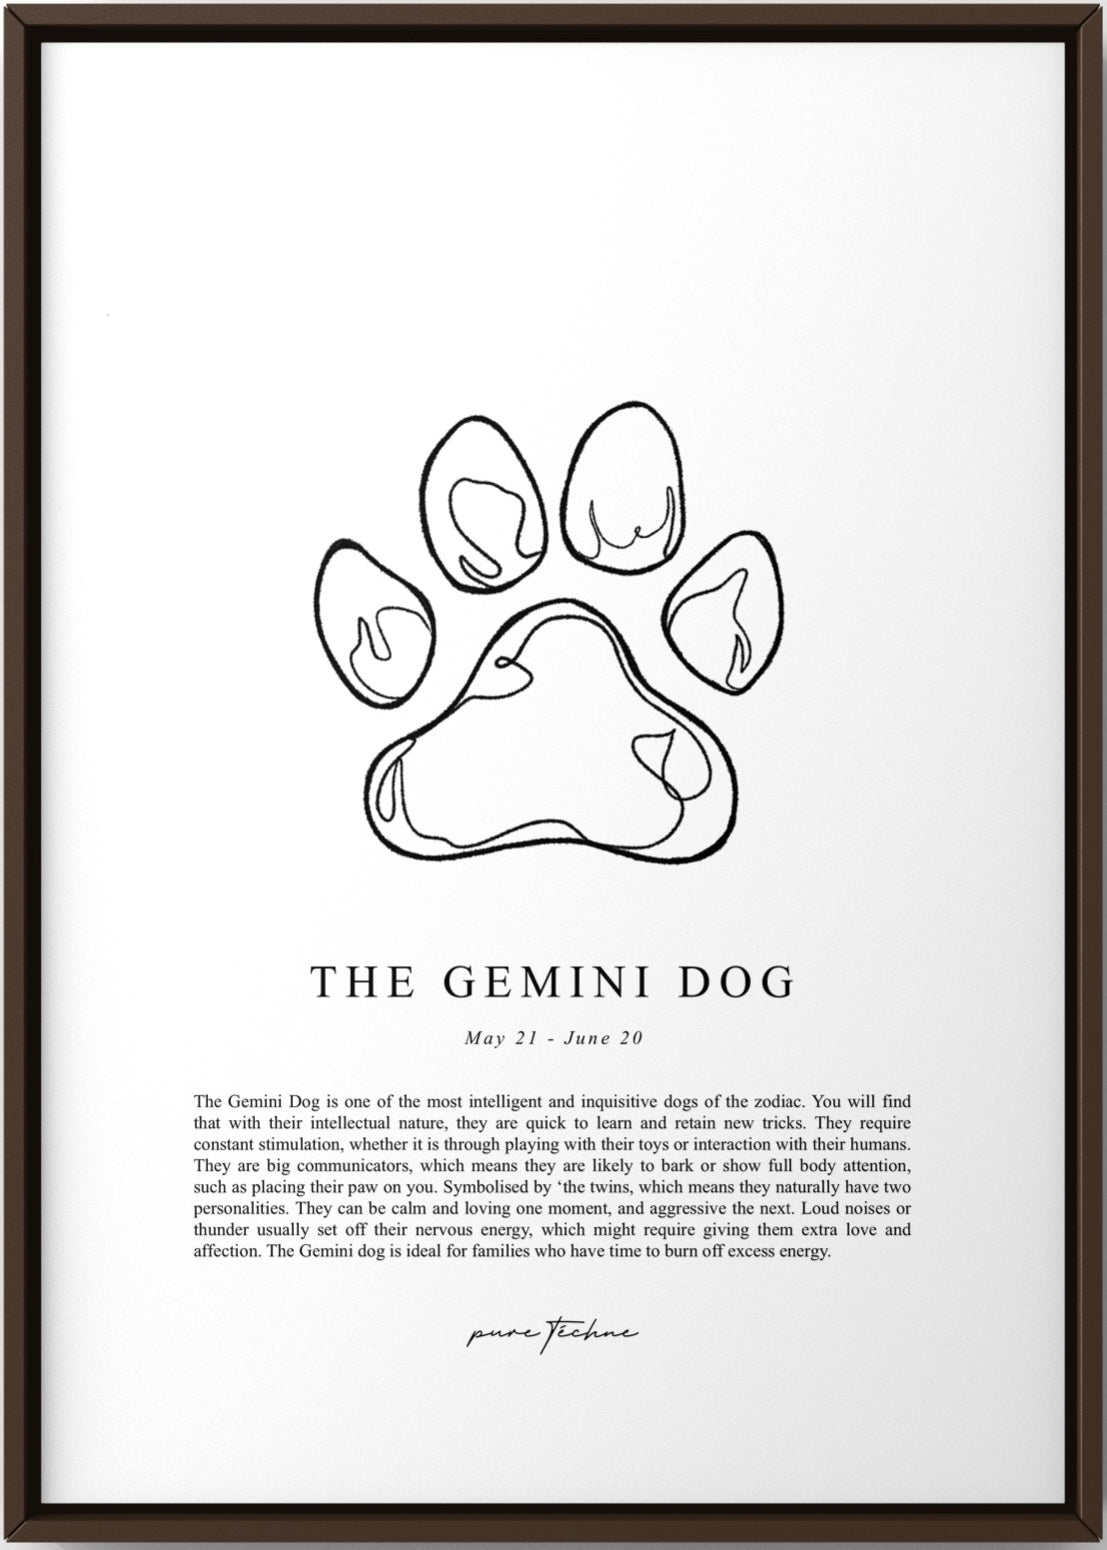 The 'Gemini' Dog